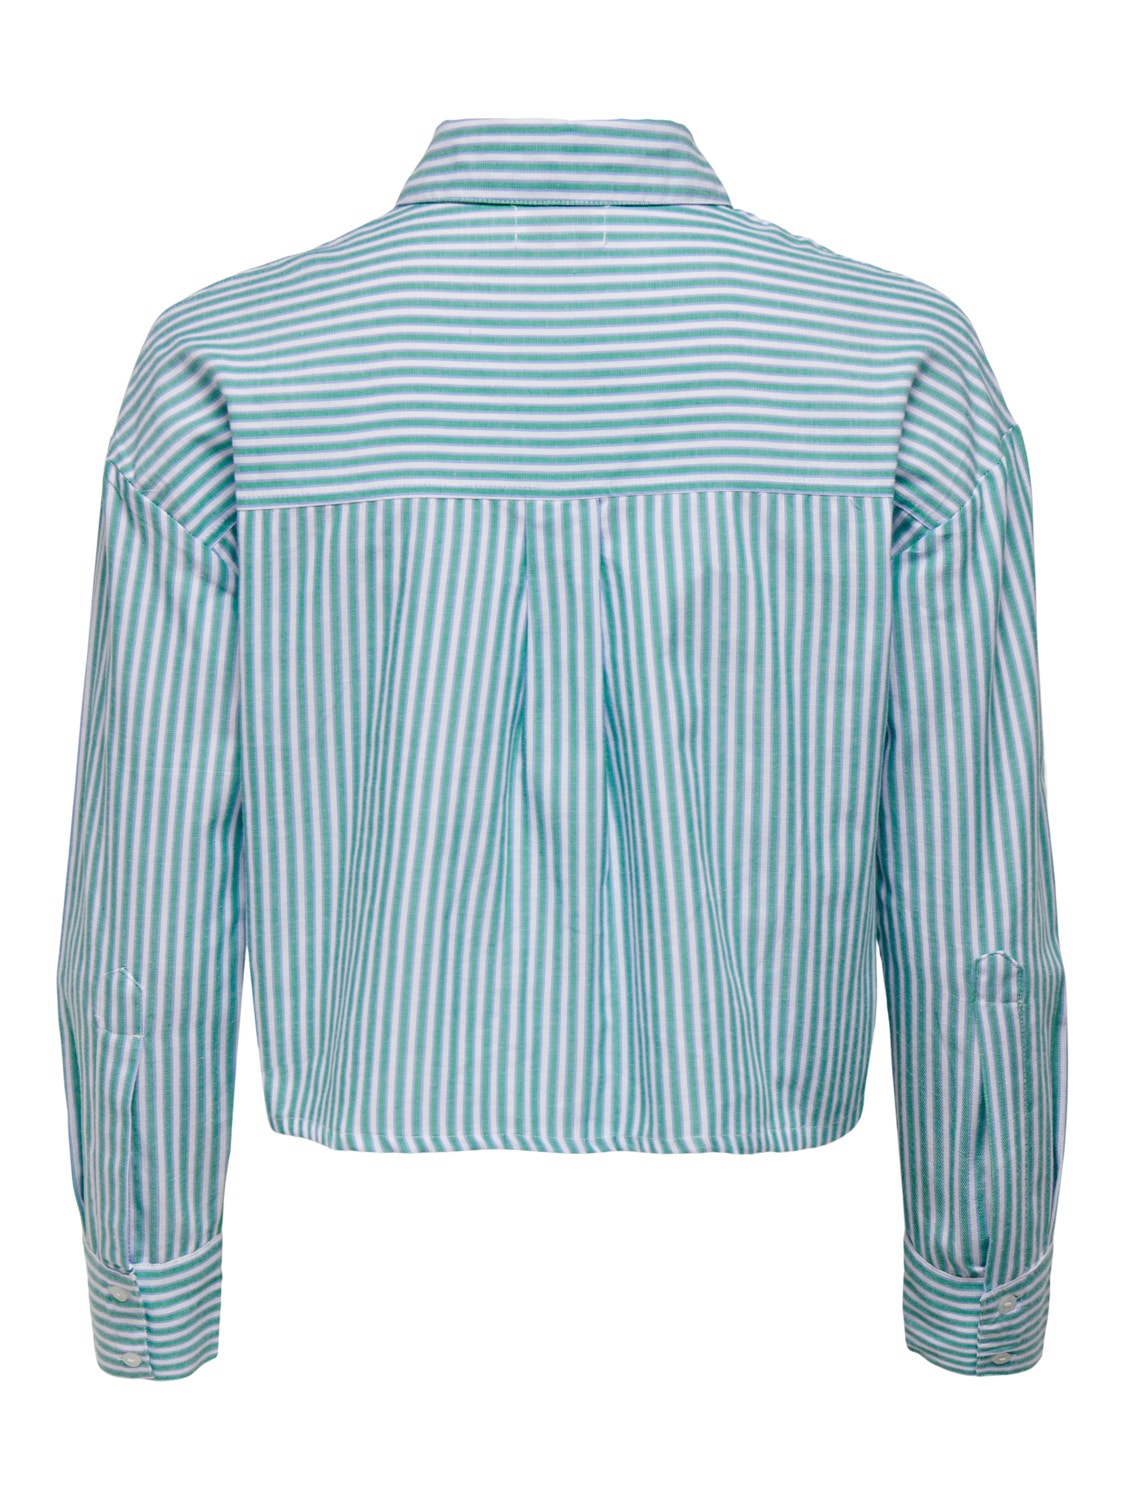 ONLY Stripete Skjorte -Simply Green - 15251743